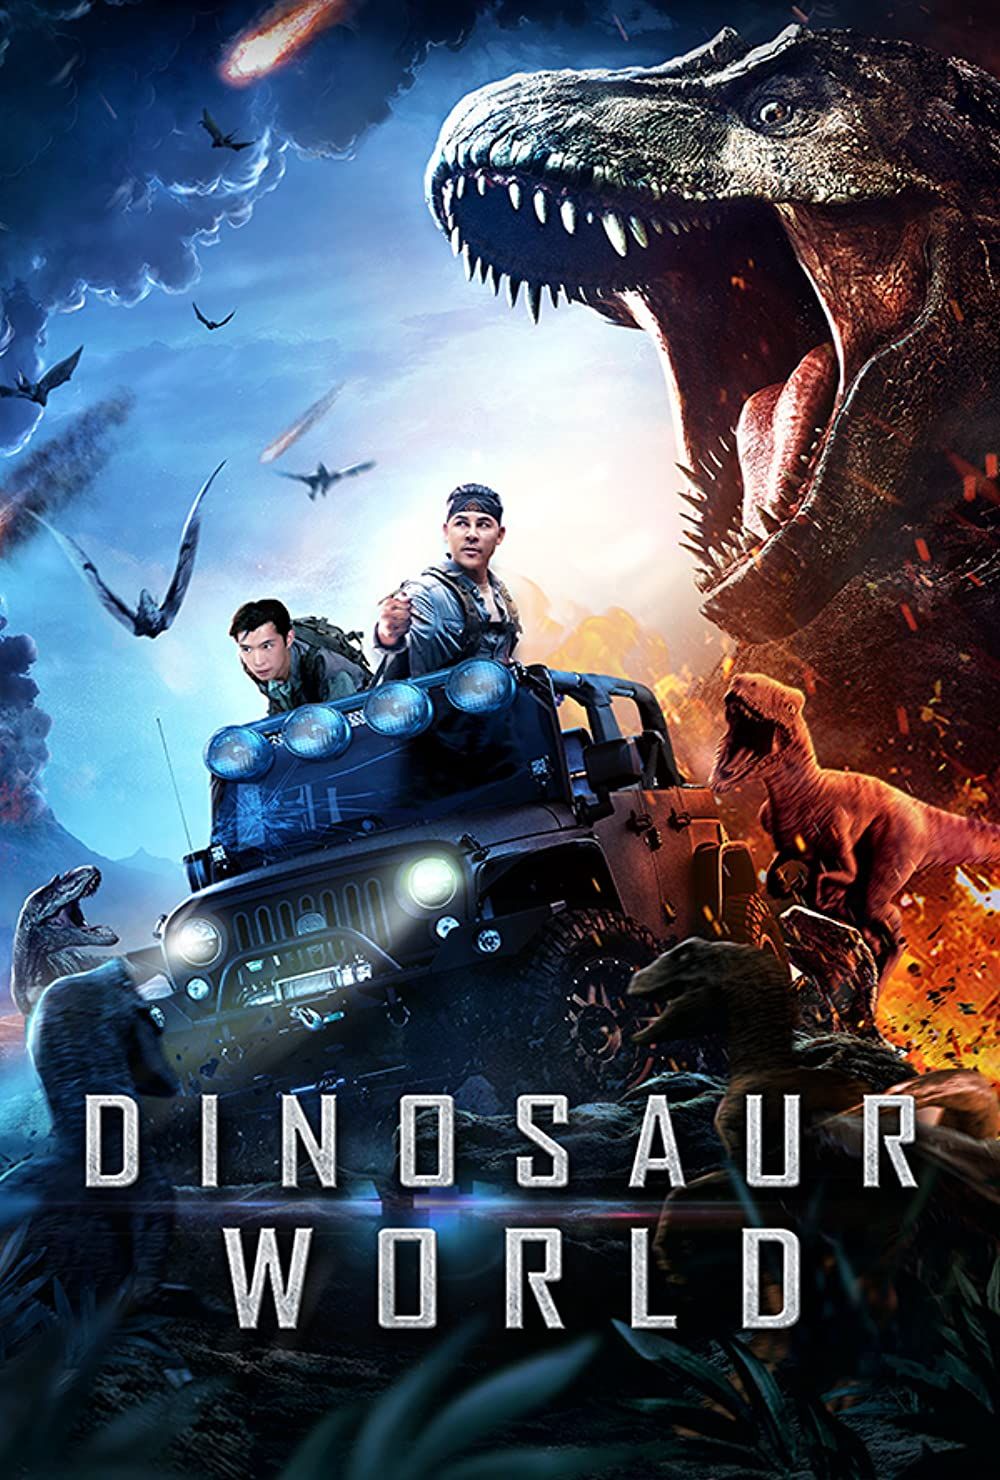 Dinosaur World (2020) Hindi Dubbed HDRip download full movie